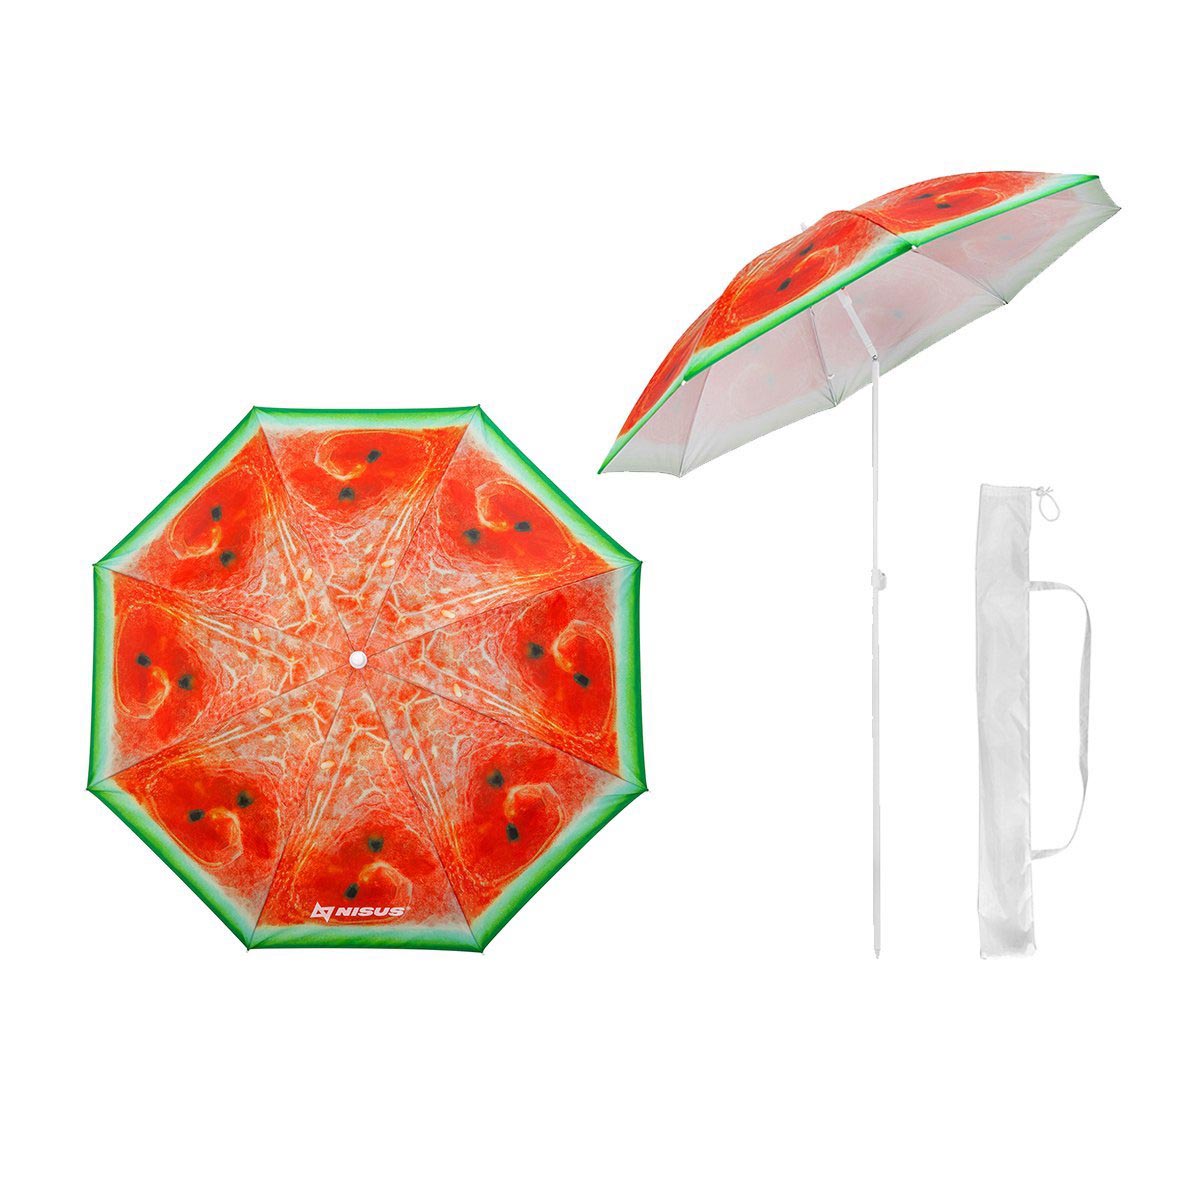 Watermelon Folding Tilting Beach Umbrella with Carry Bag